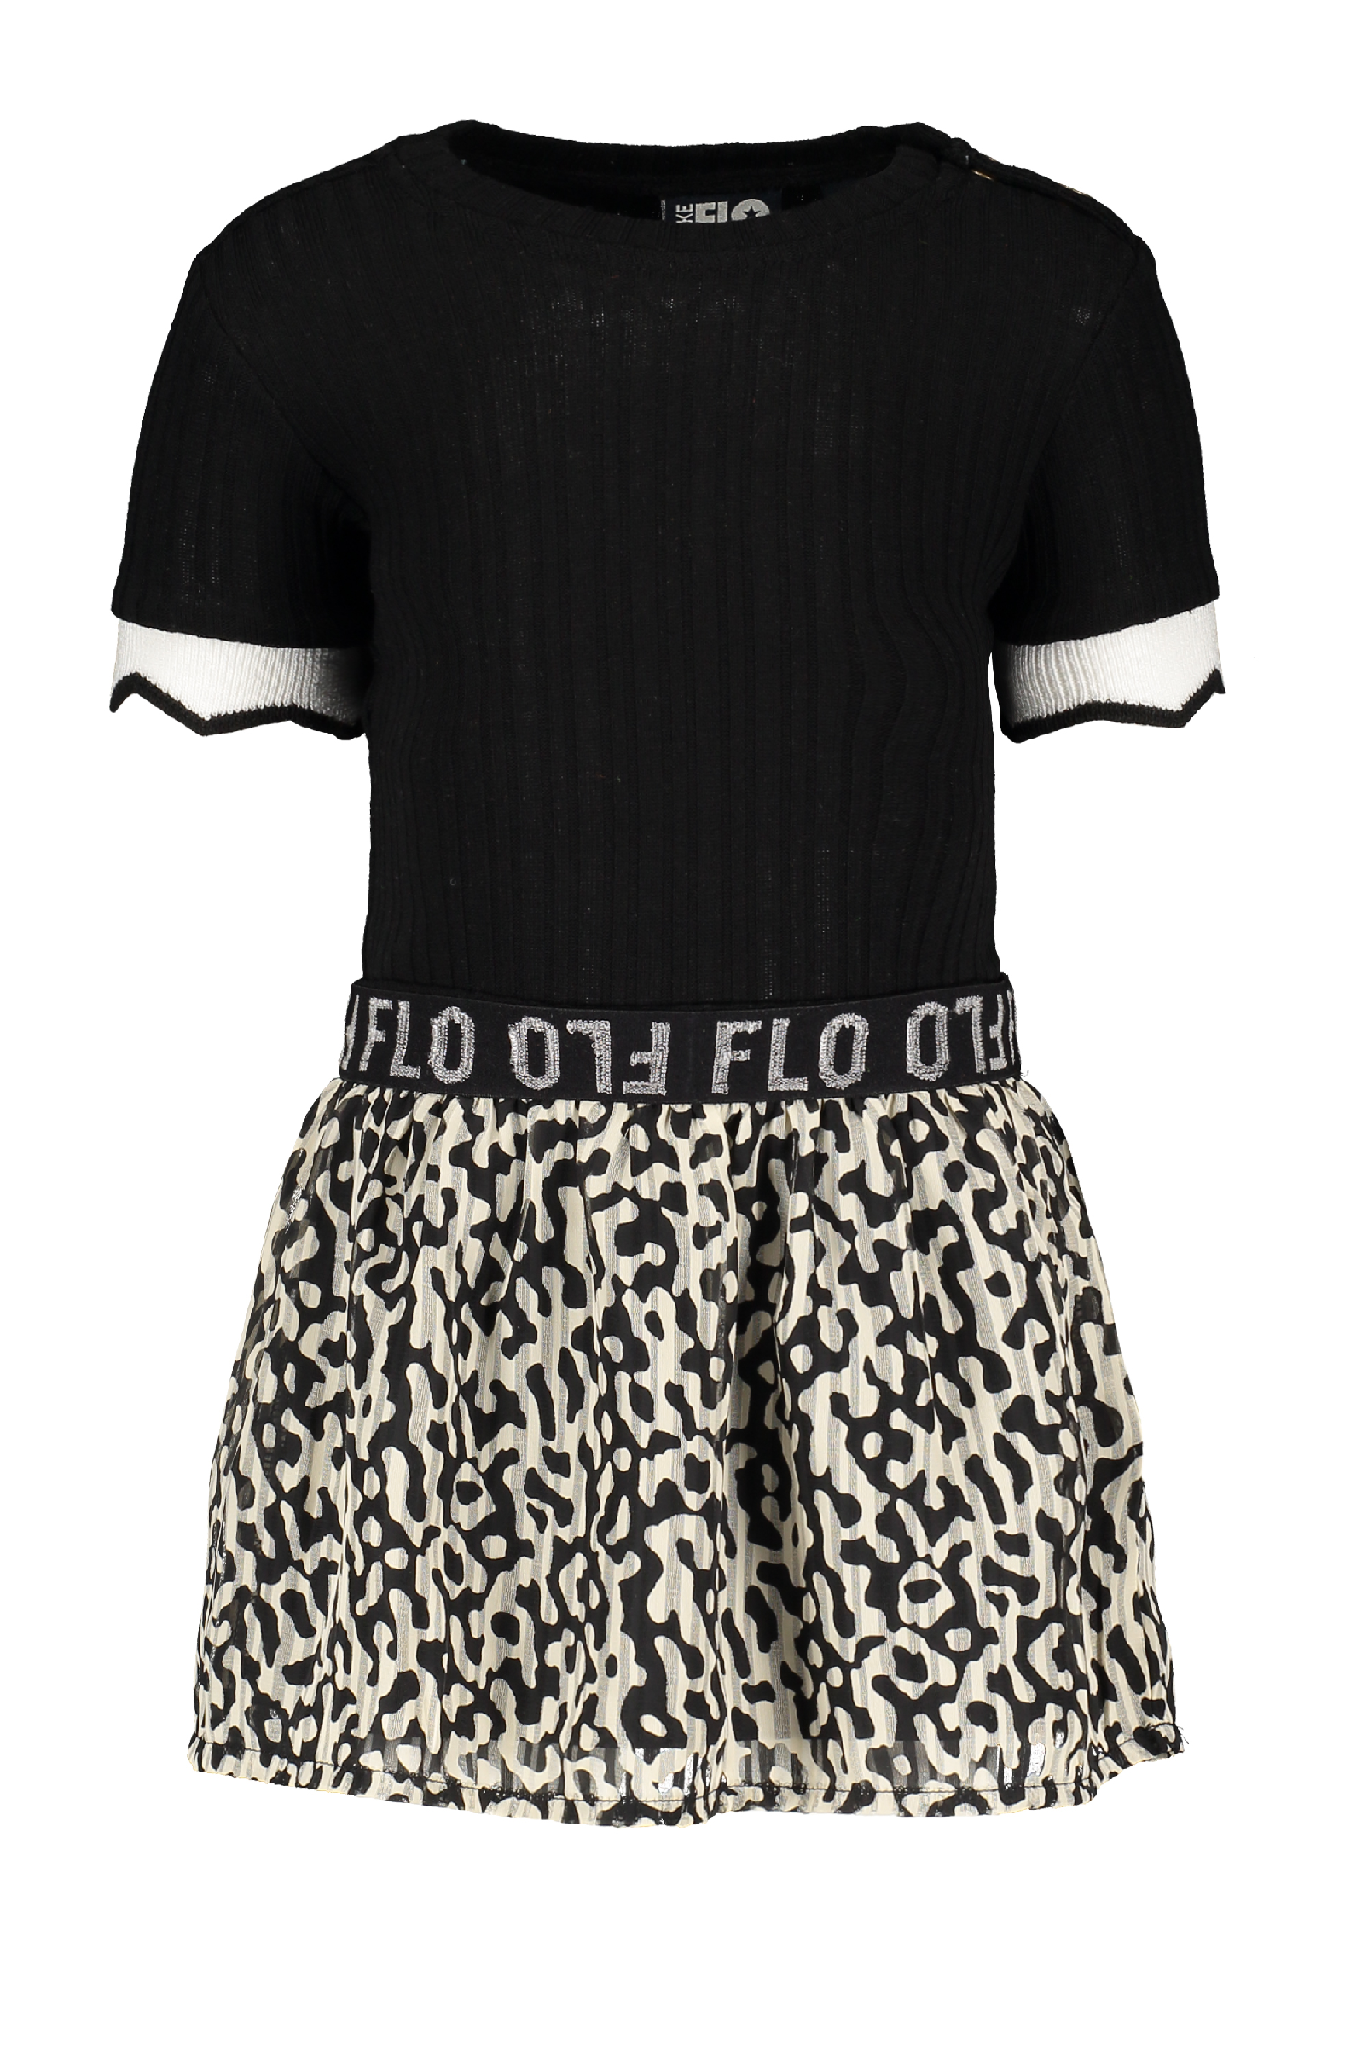 Meisjes Flo baby girls ss rib dress with fancy plisse skirt van Flo in de kleur Graphic in maat 92.